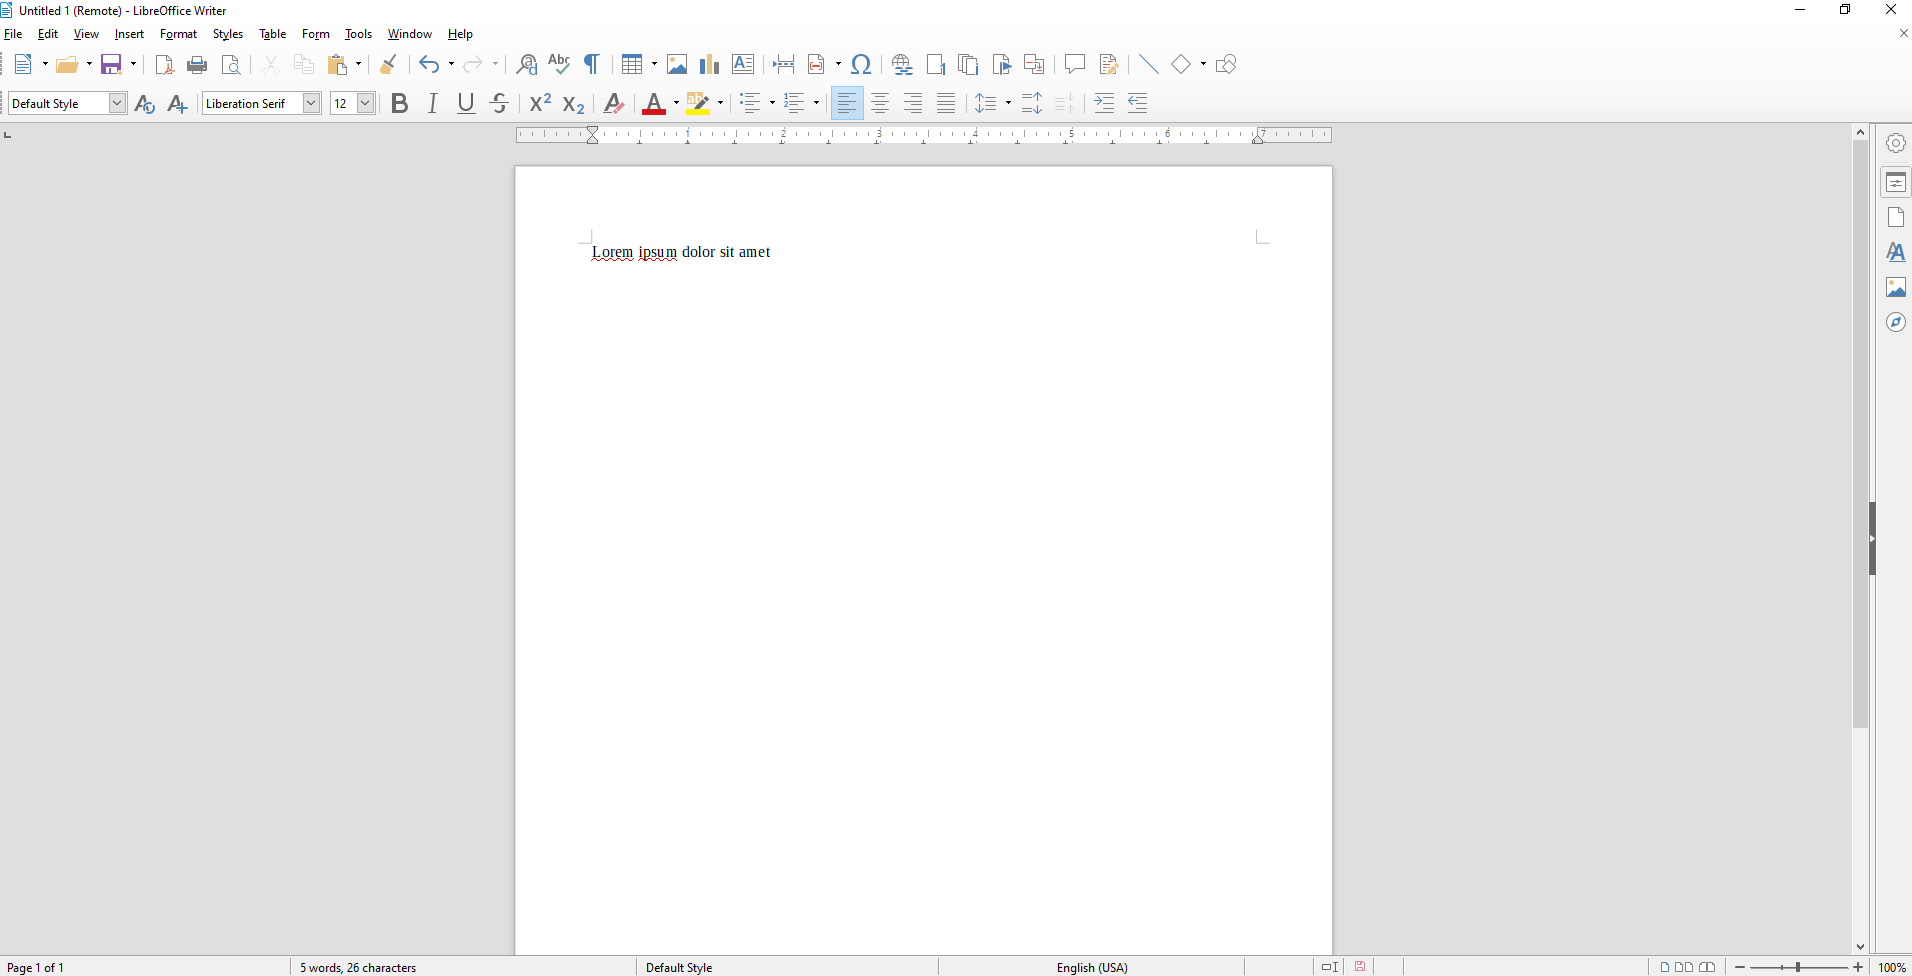 Editor de textos de LibreOffice con un documento en blanco